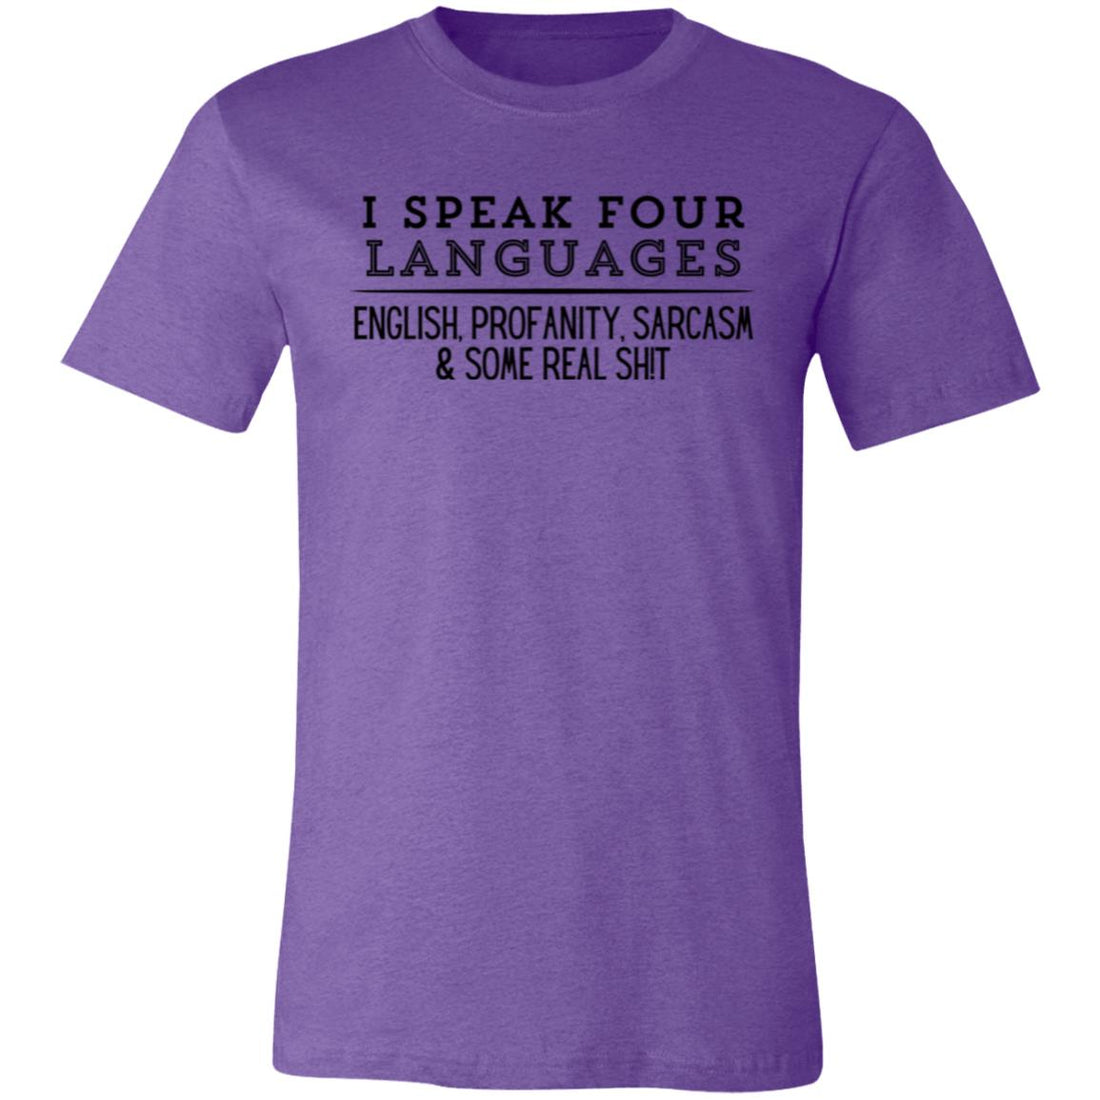 I Speak Four Languages T-Shirt - T-Shirts - Positively Sassy - I Speak Four Languages T-Shirt